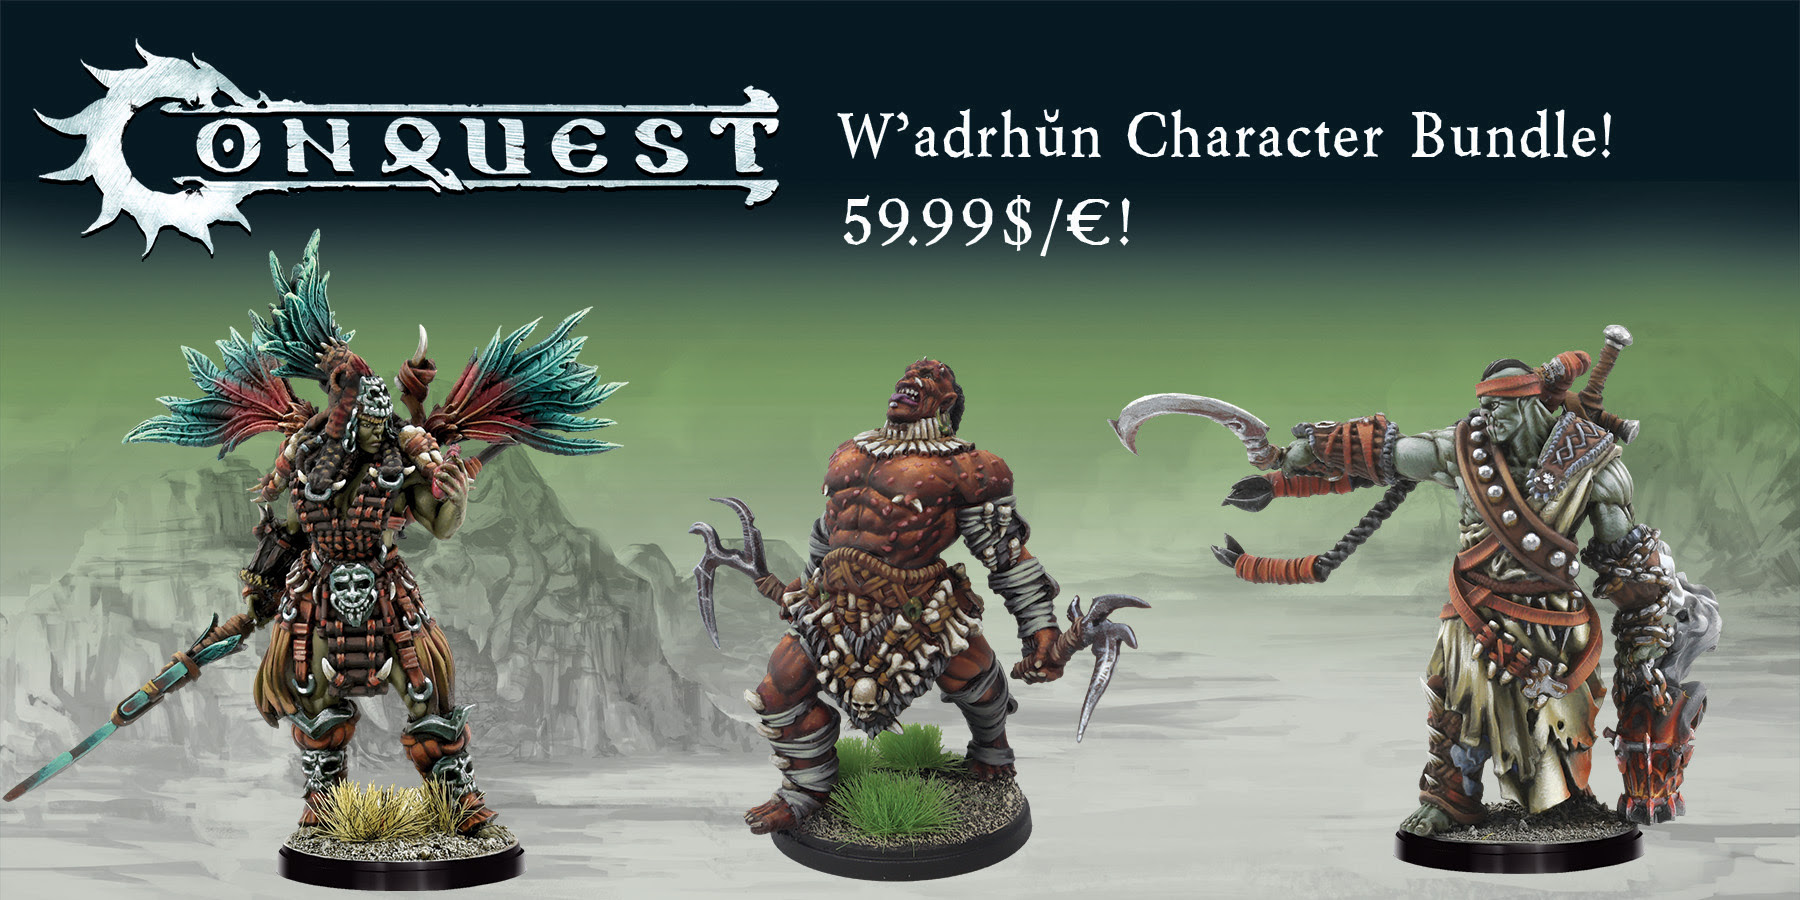 Wadrhun Character Bundle - Conquest